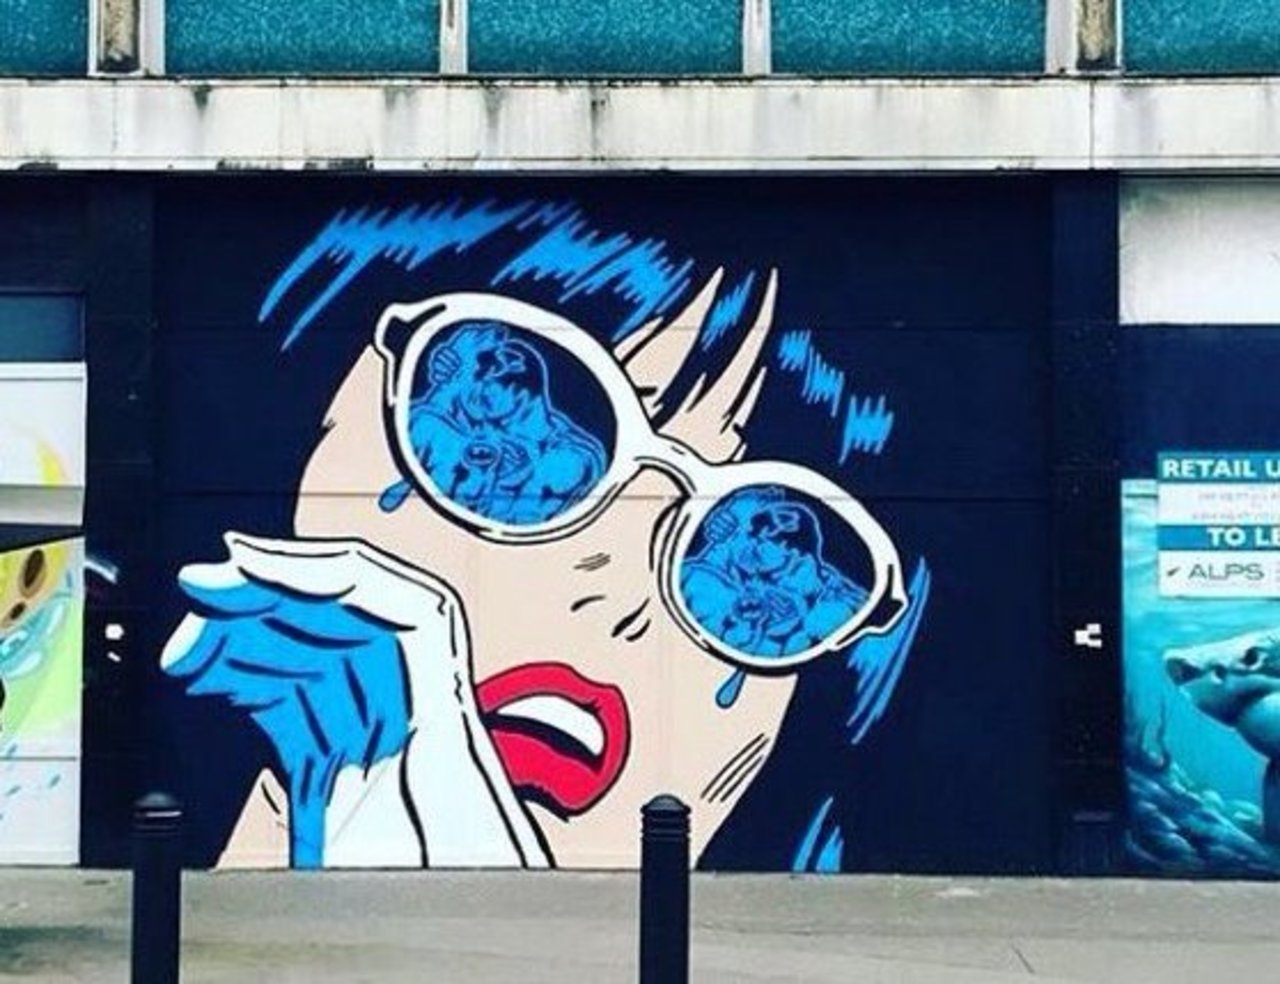 #streetart #urbanart #graffiti #painting by #artist Rich Simmons in Croydon, London ️ https://t.co/Lh7Ri7pjiJ